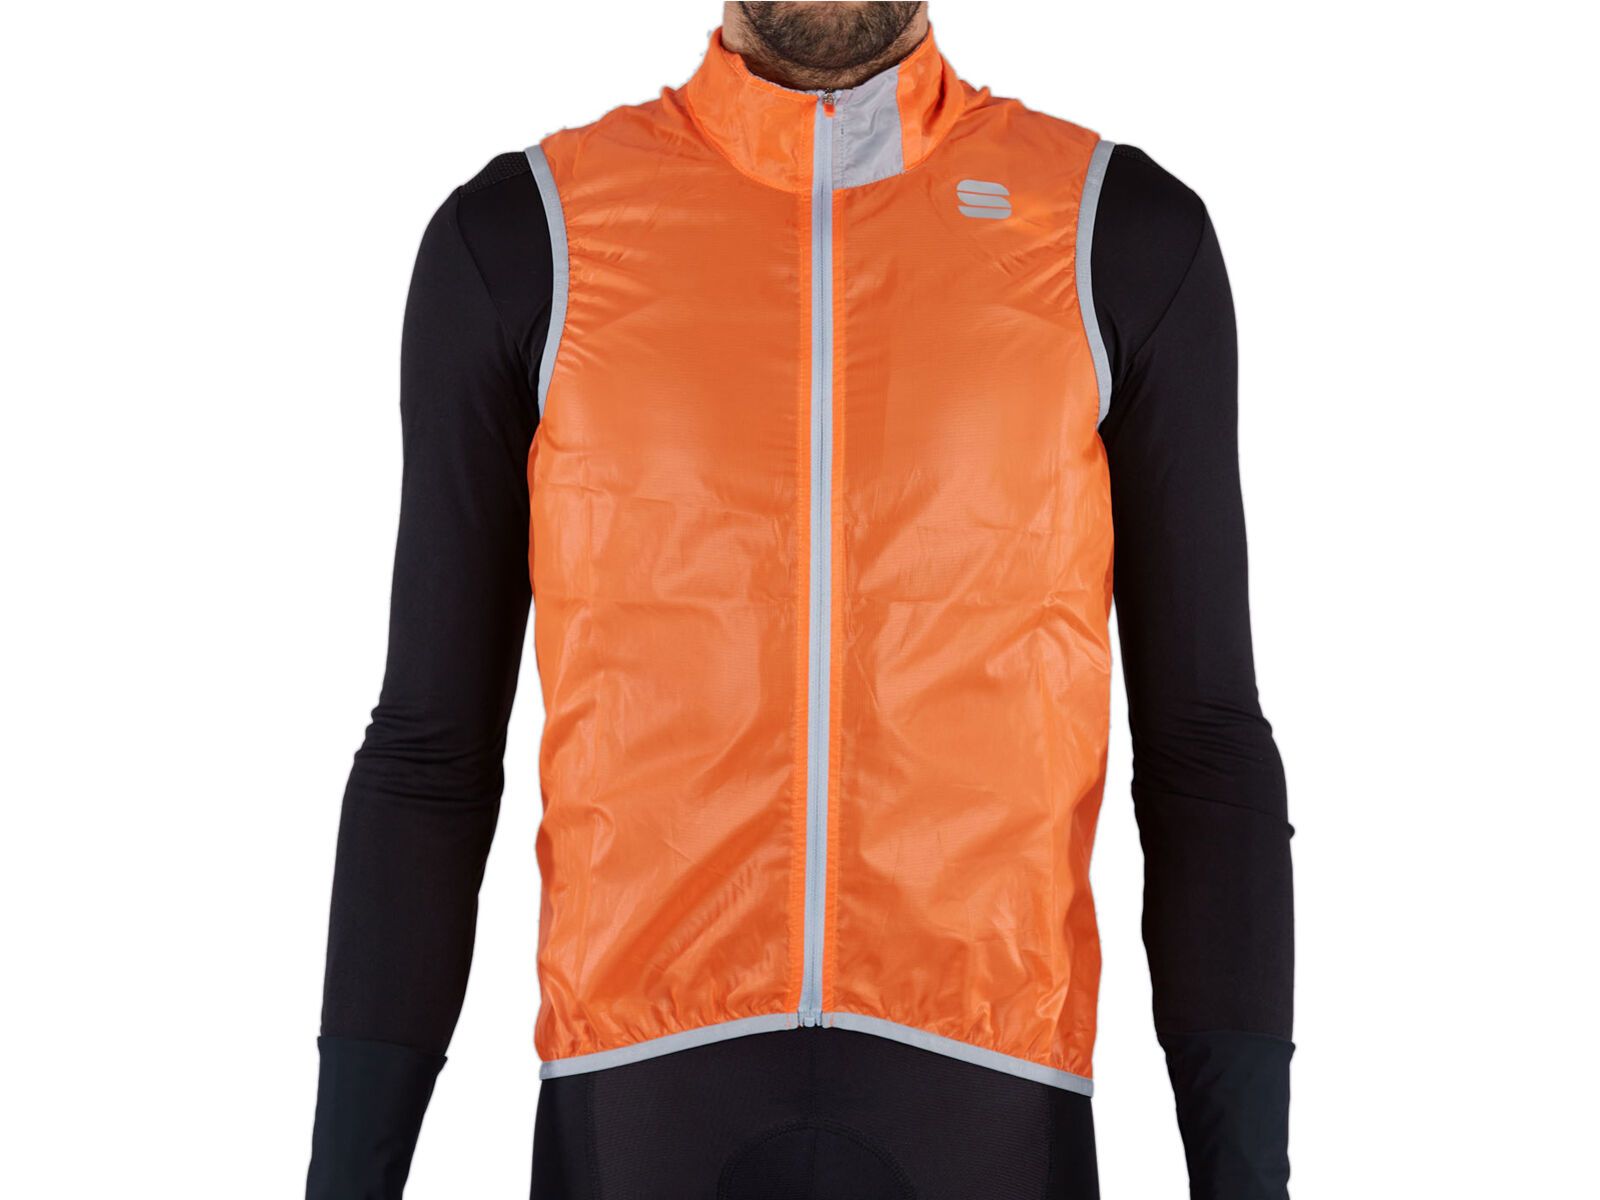 Sportful Hot Pack Easylight Vest, orange sdr | Bild 1